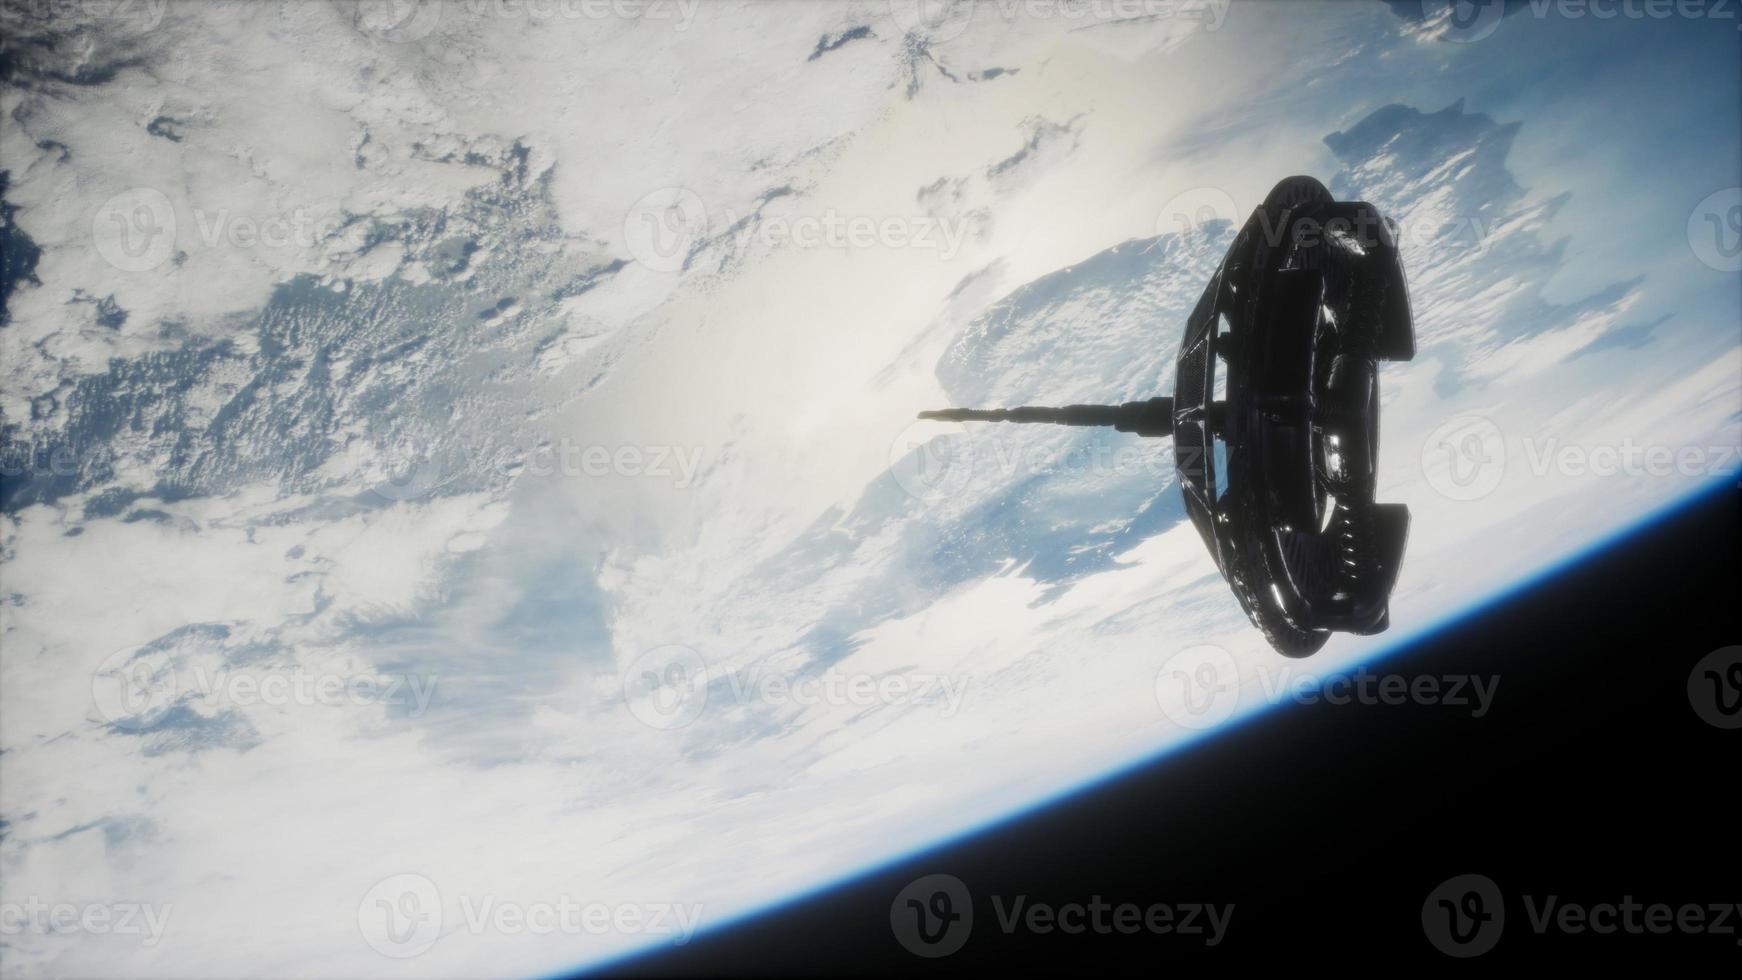 satellite spatial futuriste en orbite autour de la terre photo